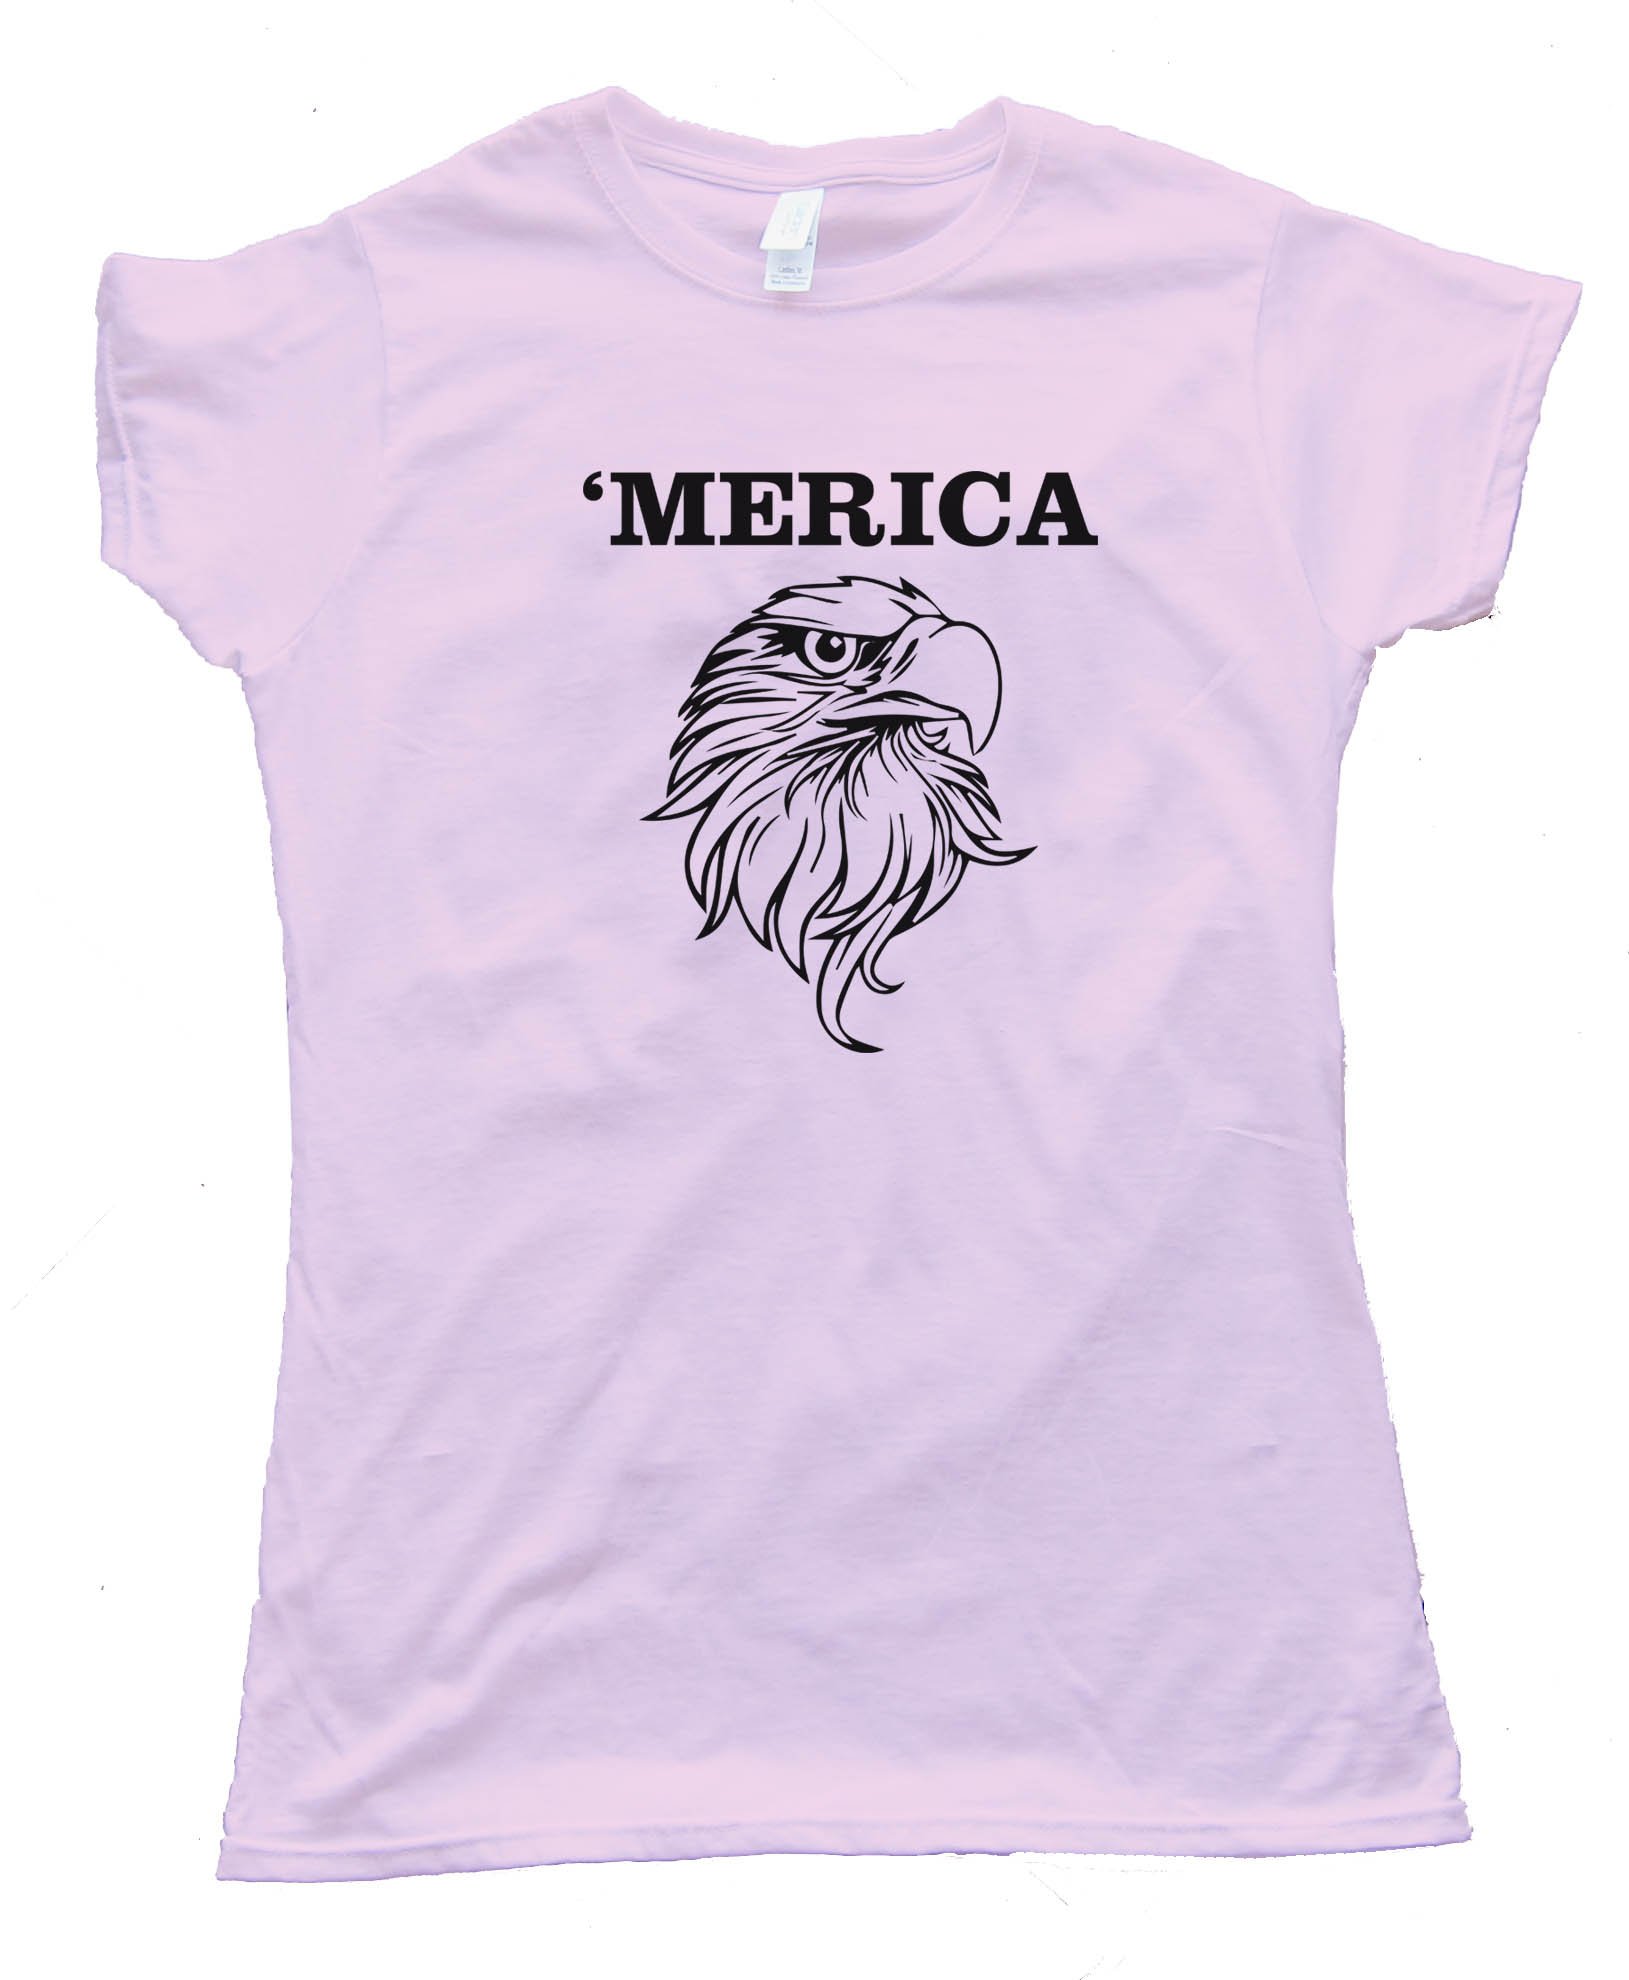 Womens 'Merica - American - Tee Shirt